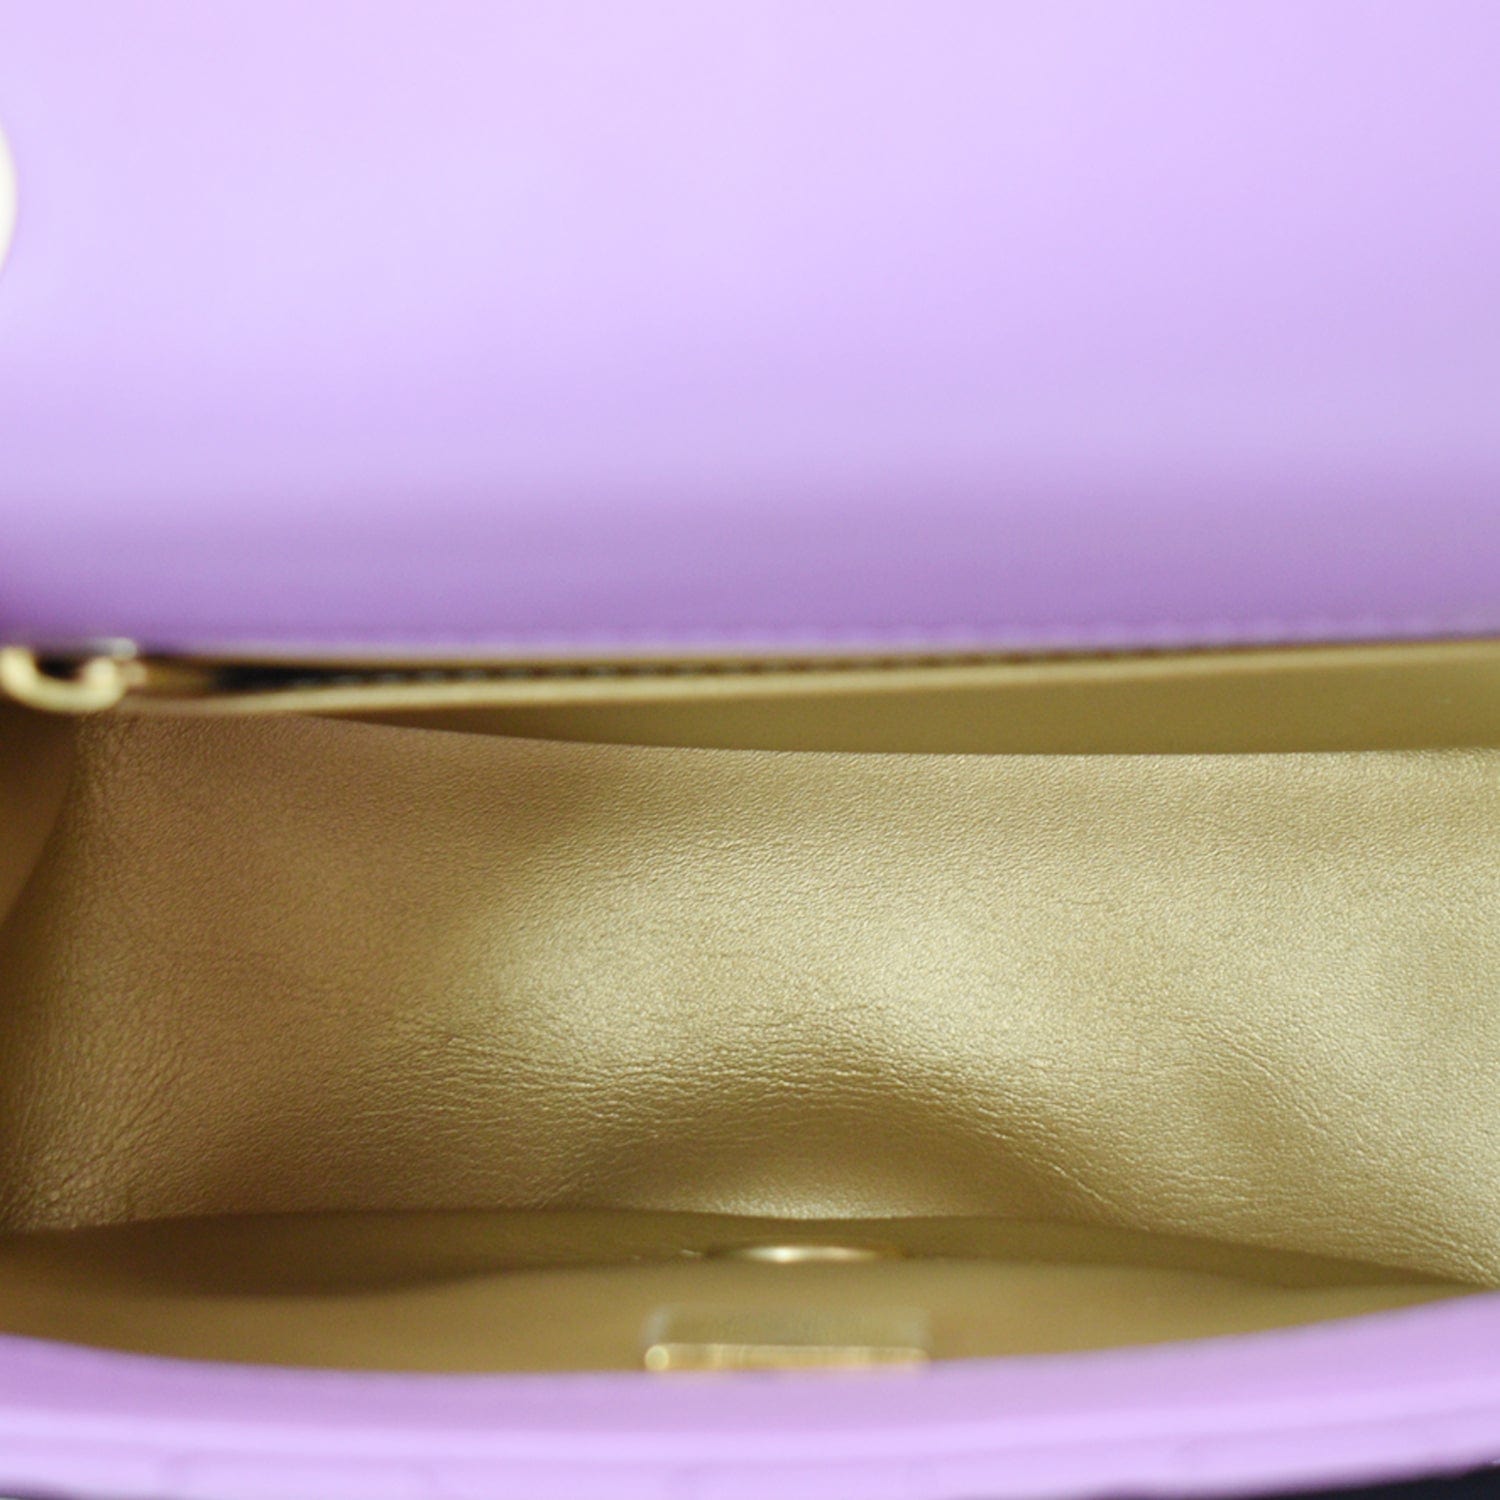 Gucci Purple Mini Handbag with Gold Chain